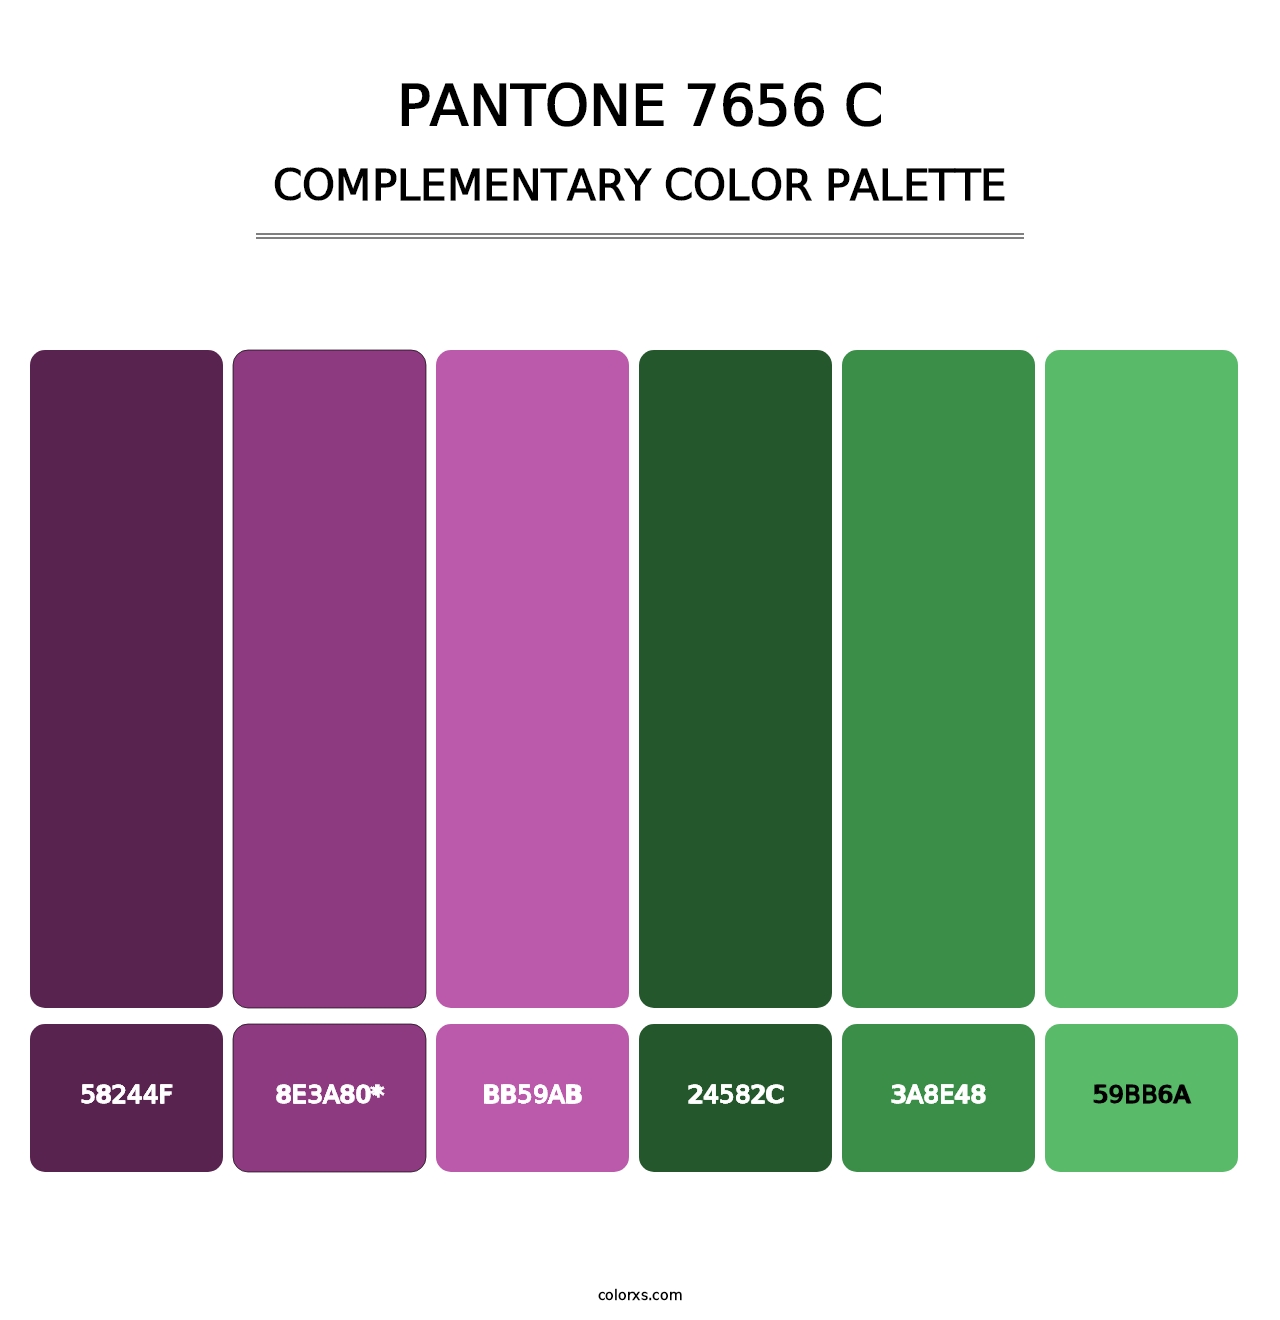 PANTONE 7656 C - Complementary Color Palette